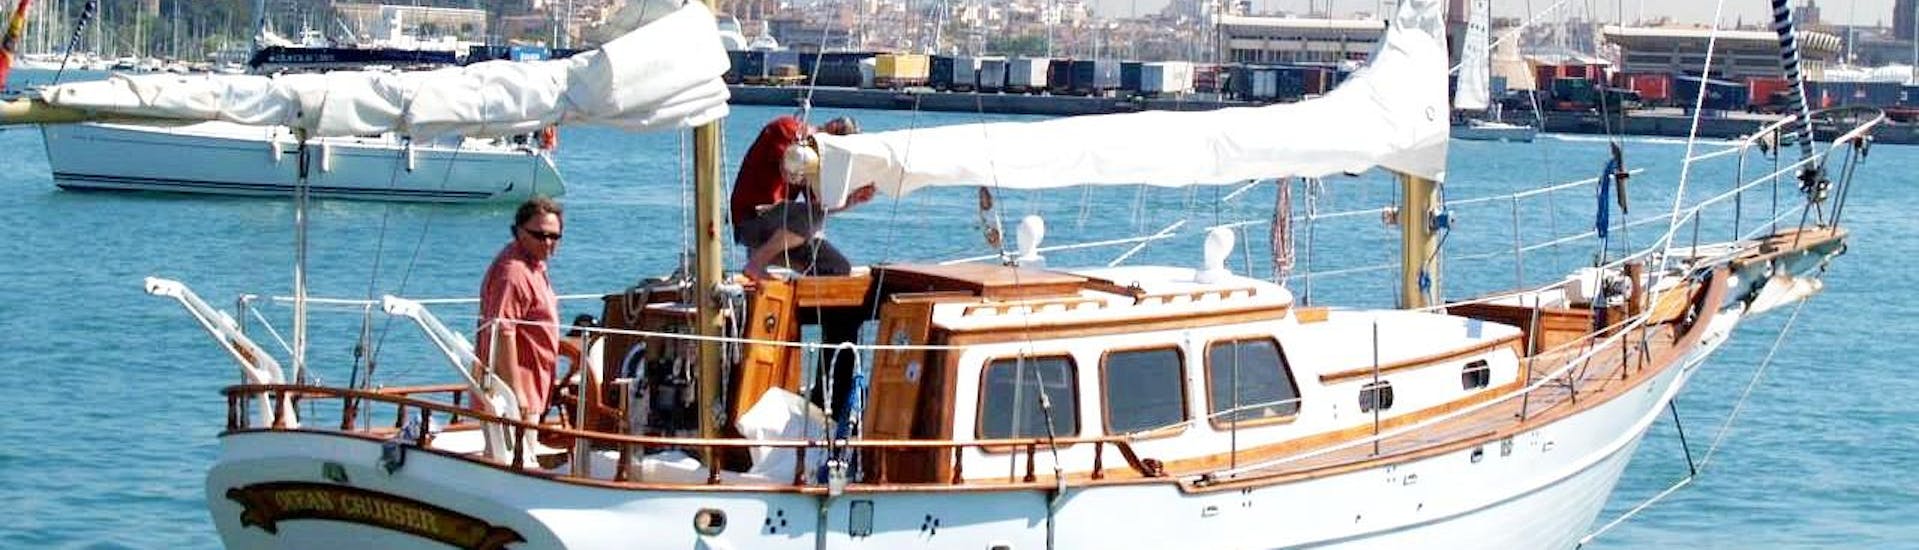 The historic Ocean Cruiser beginning a boat trip in Costa del Sol along the Mediterranean with Ocean Cruiser.